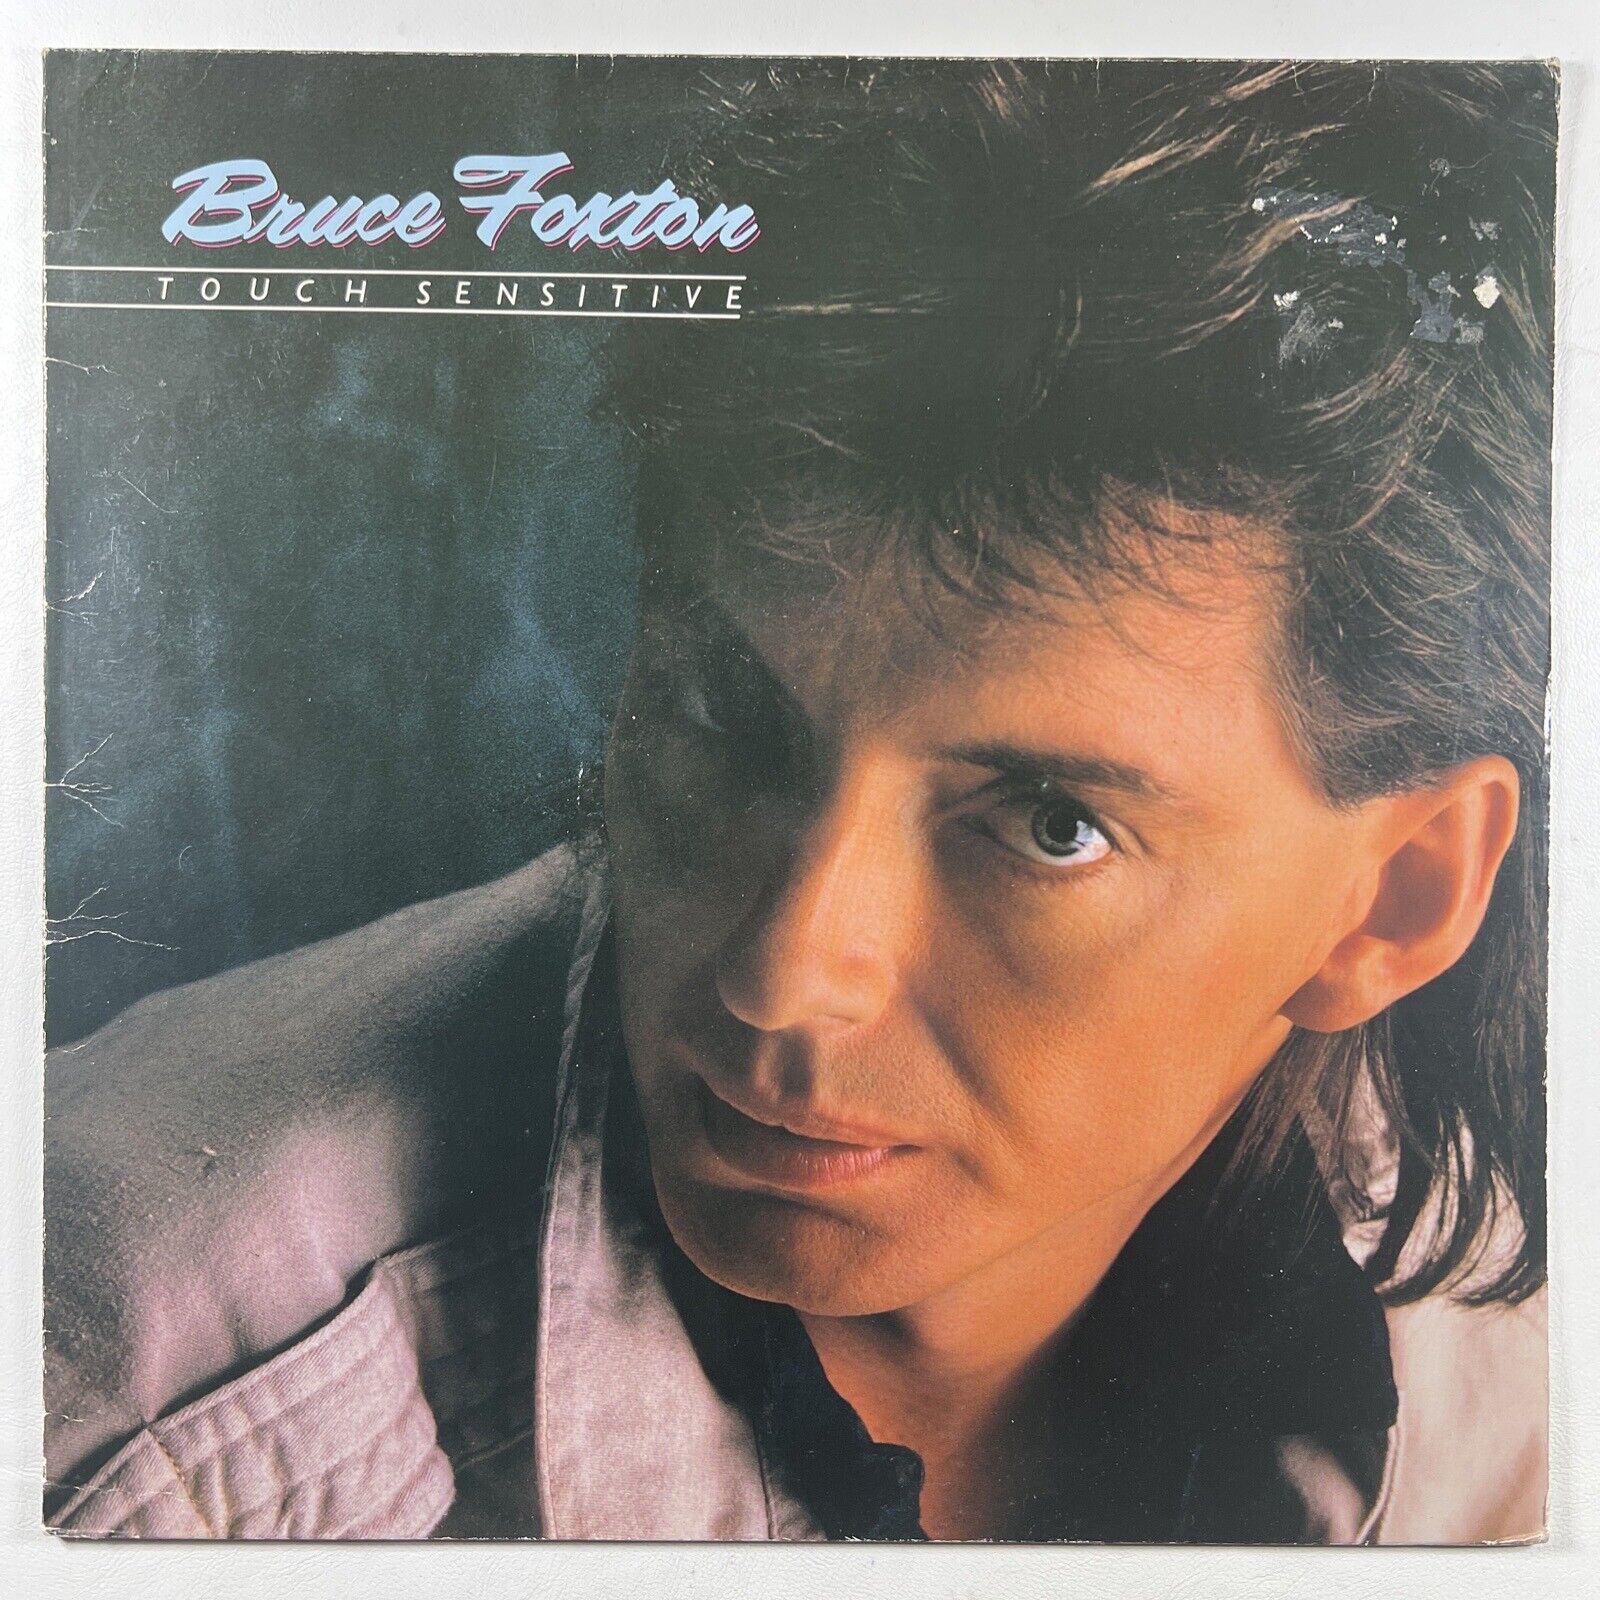 Bruce Foxton ‎”Touch Sensitive” LP/Arista ‎206 251 (NM) Germany 1984